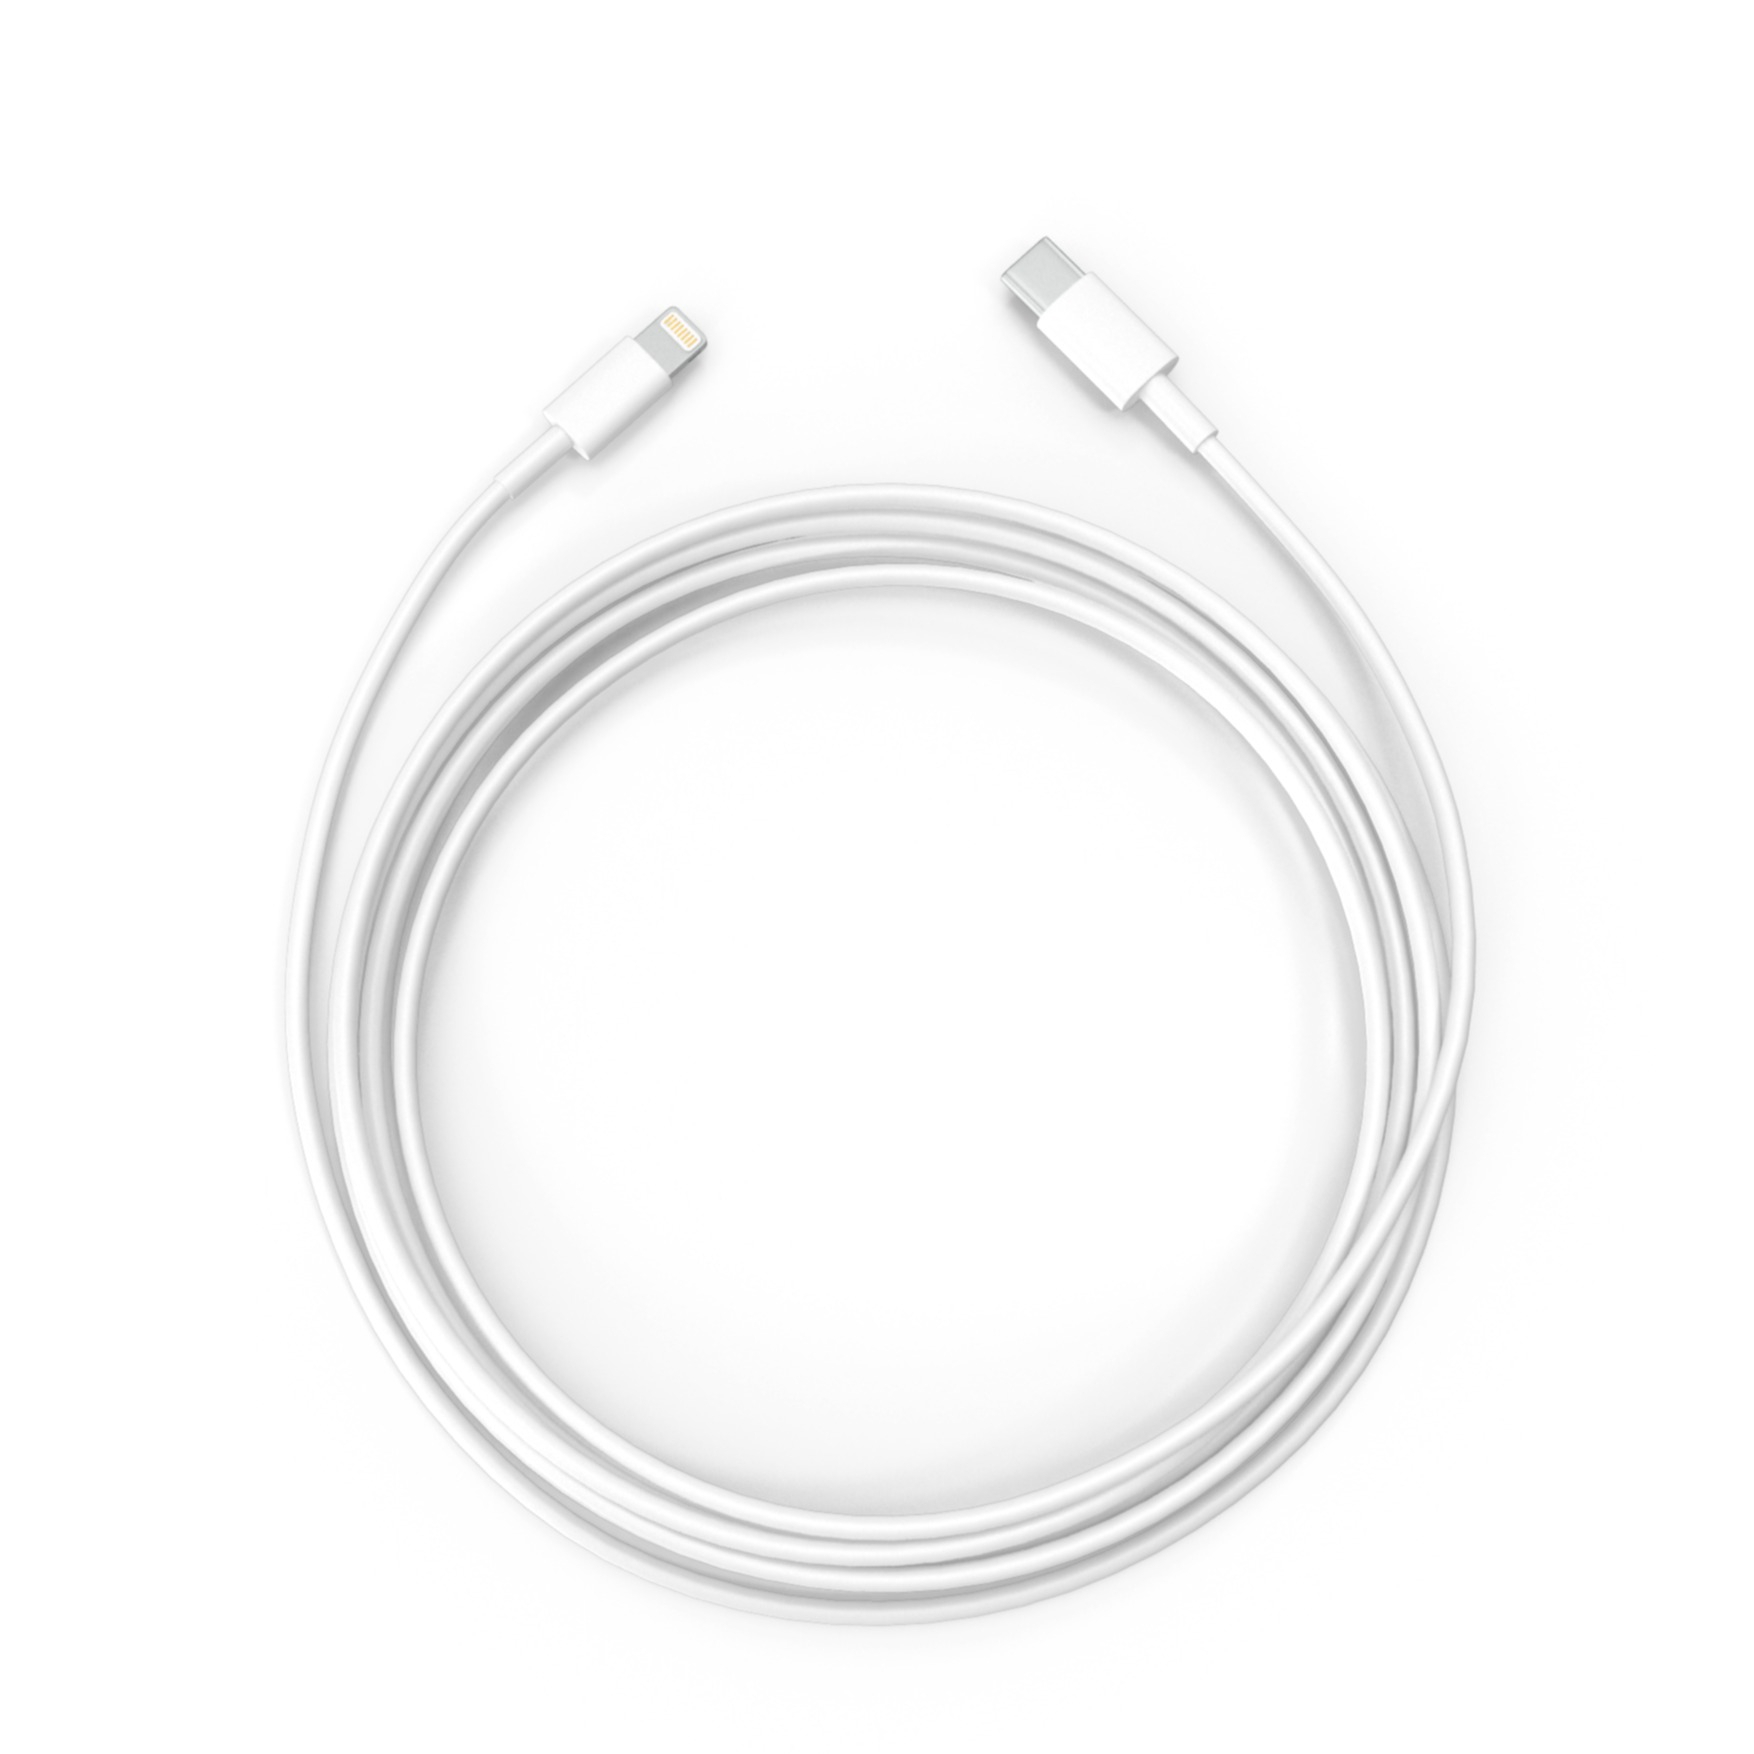 Image of Apple - (1m) iPhone 13 Lightning auf USB C Ladekabel Datenkabel MK0X2ZM/A - Weiss bei Apfelkiste.ch